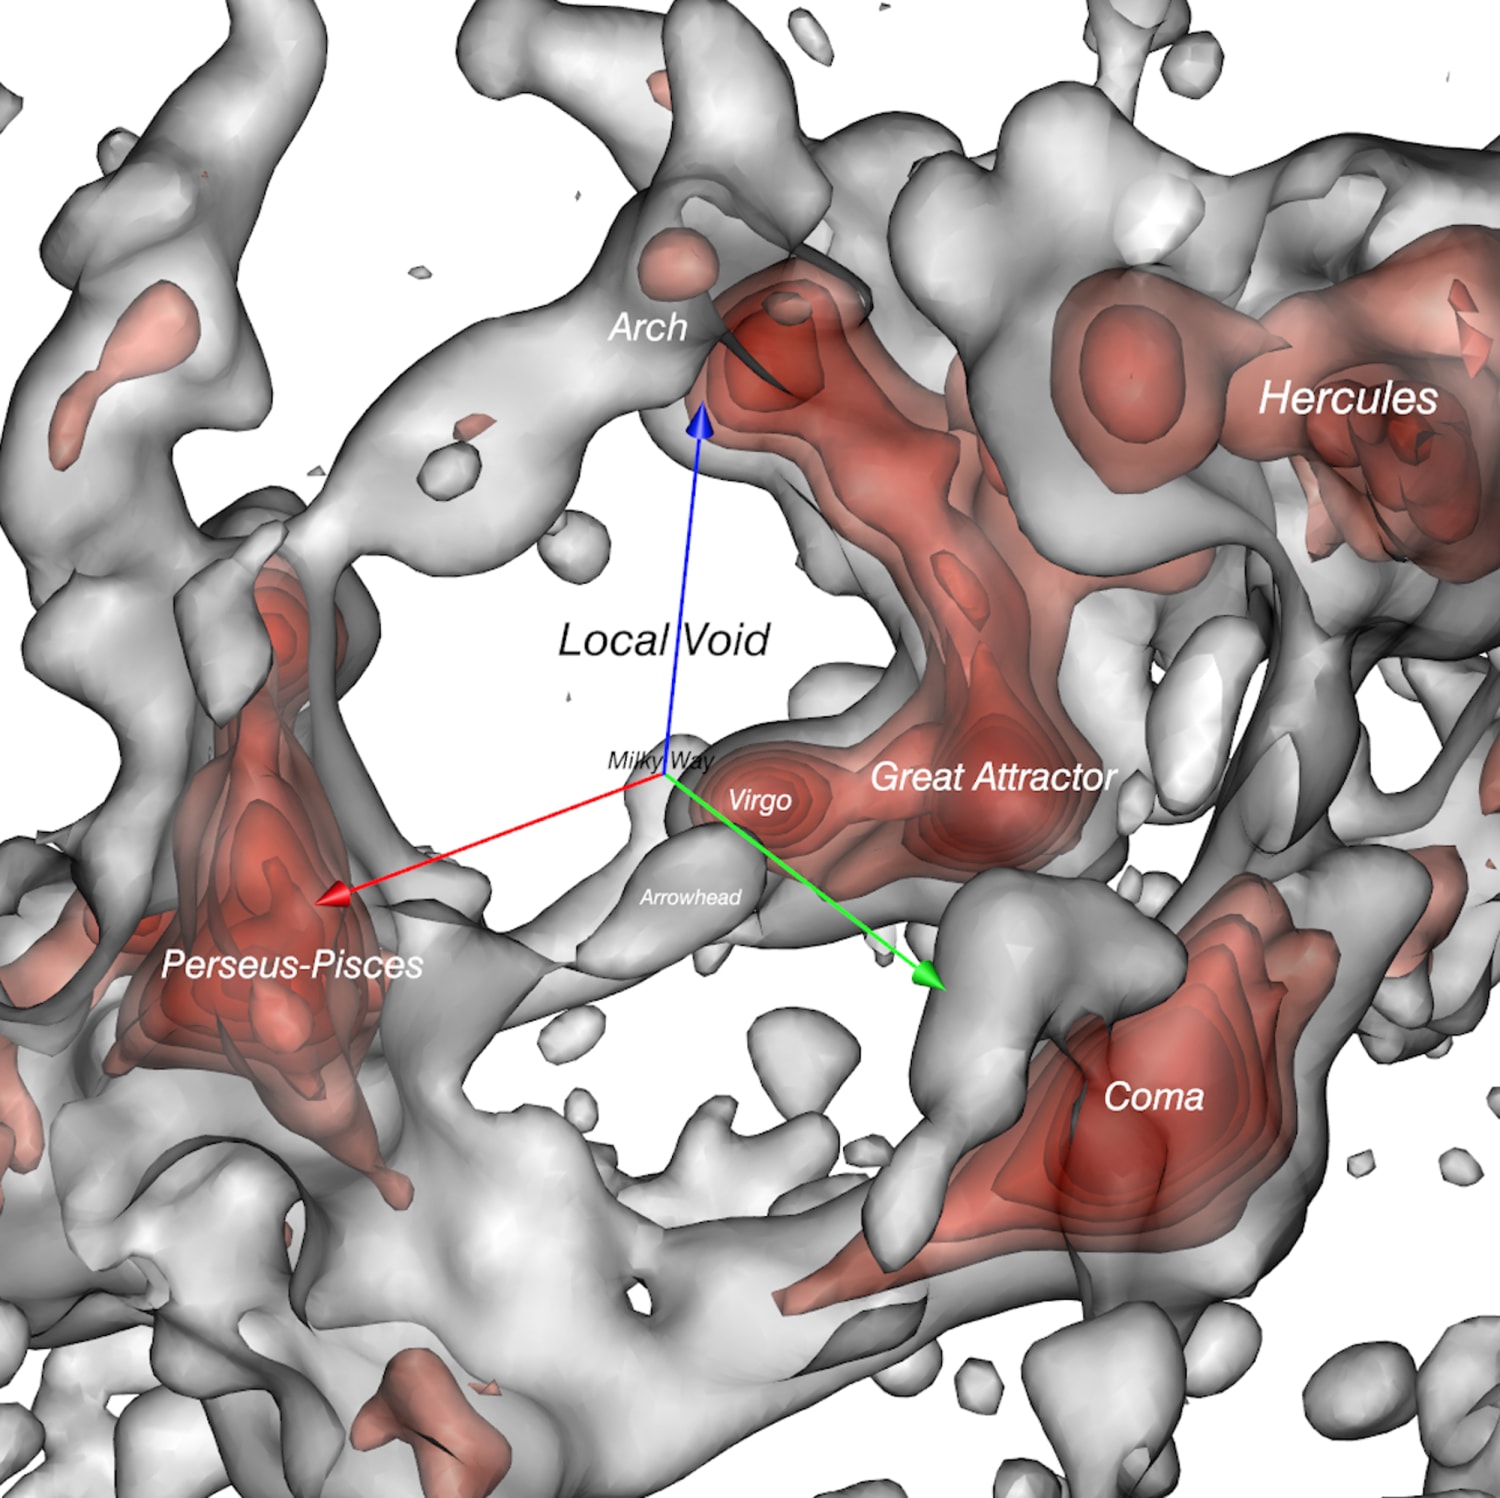 milky way galaxy super cluster map